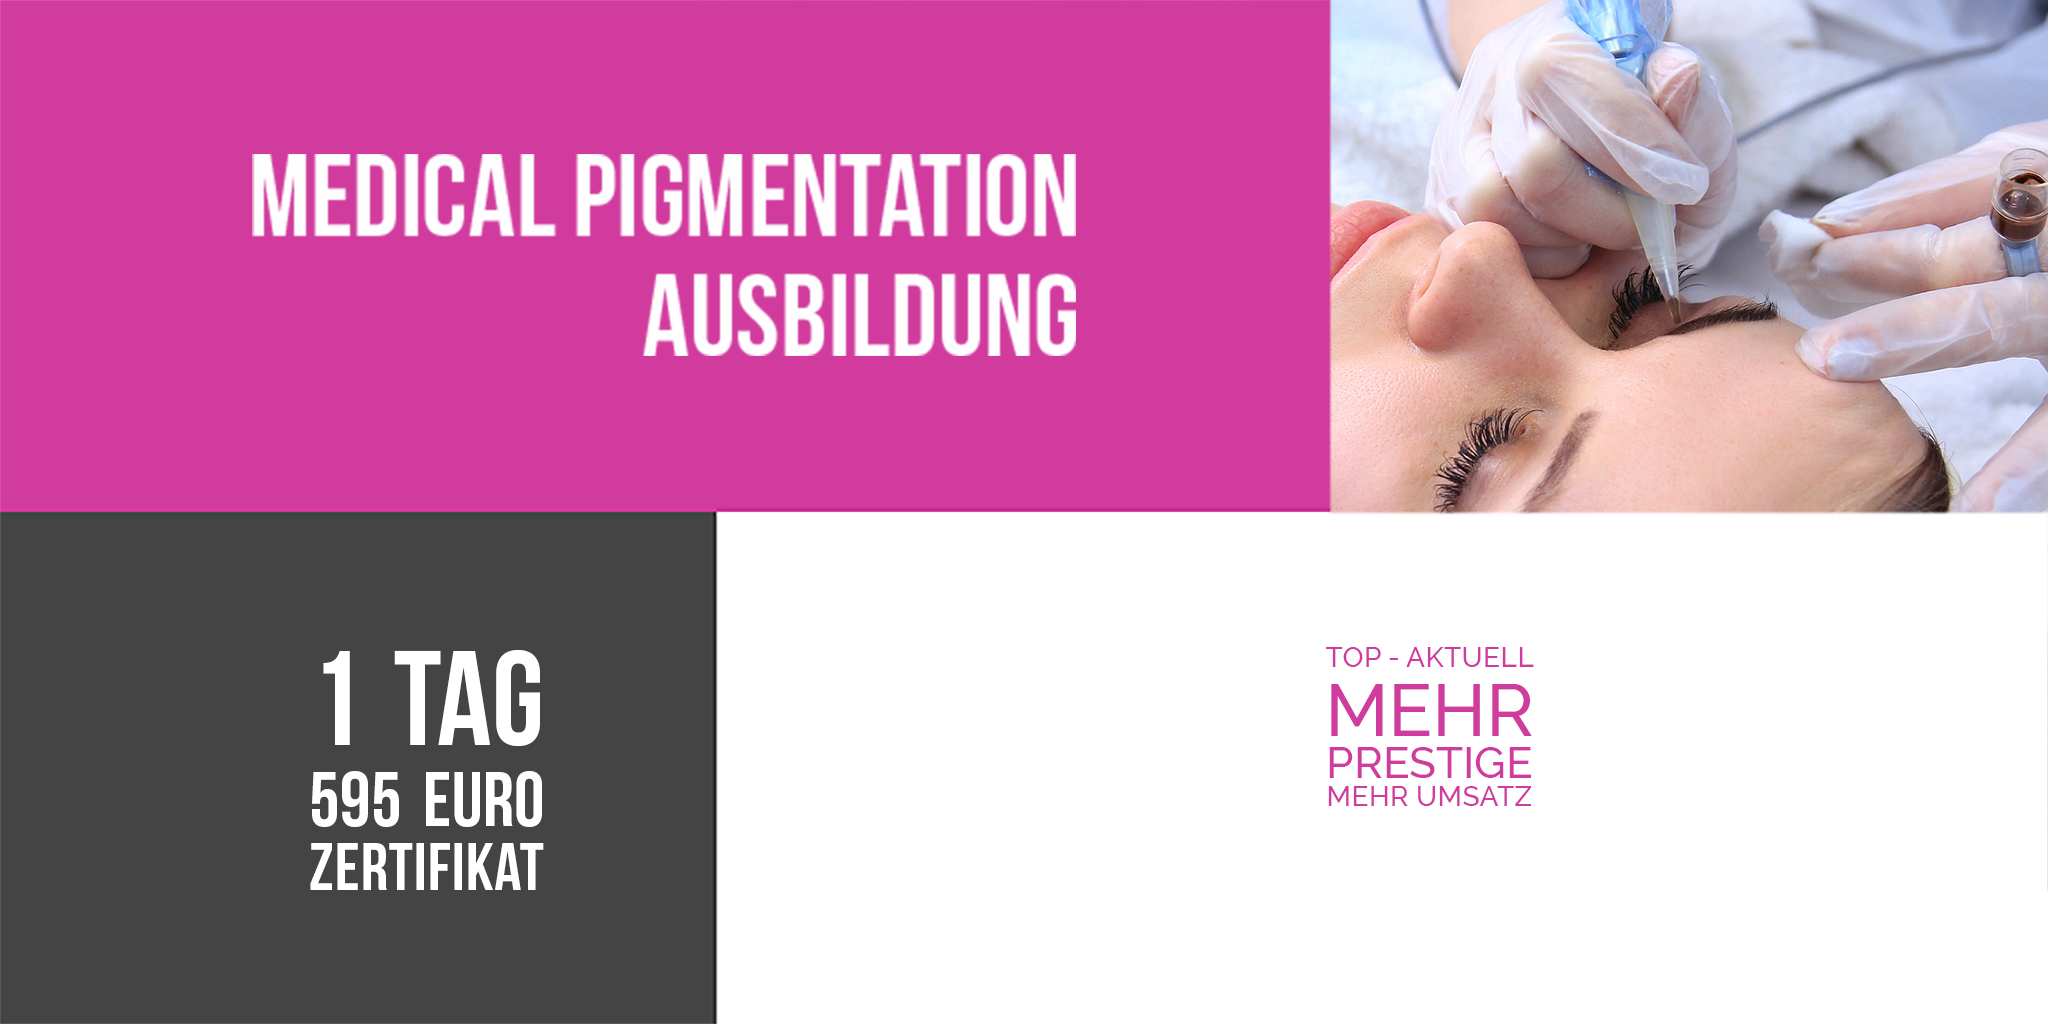 Medical Pigmentation Ausbildung Berlin